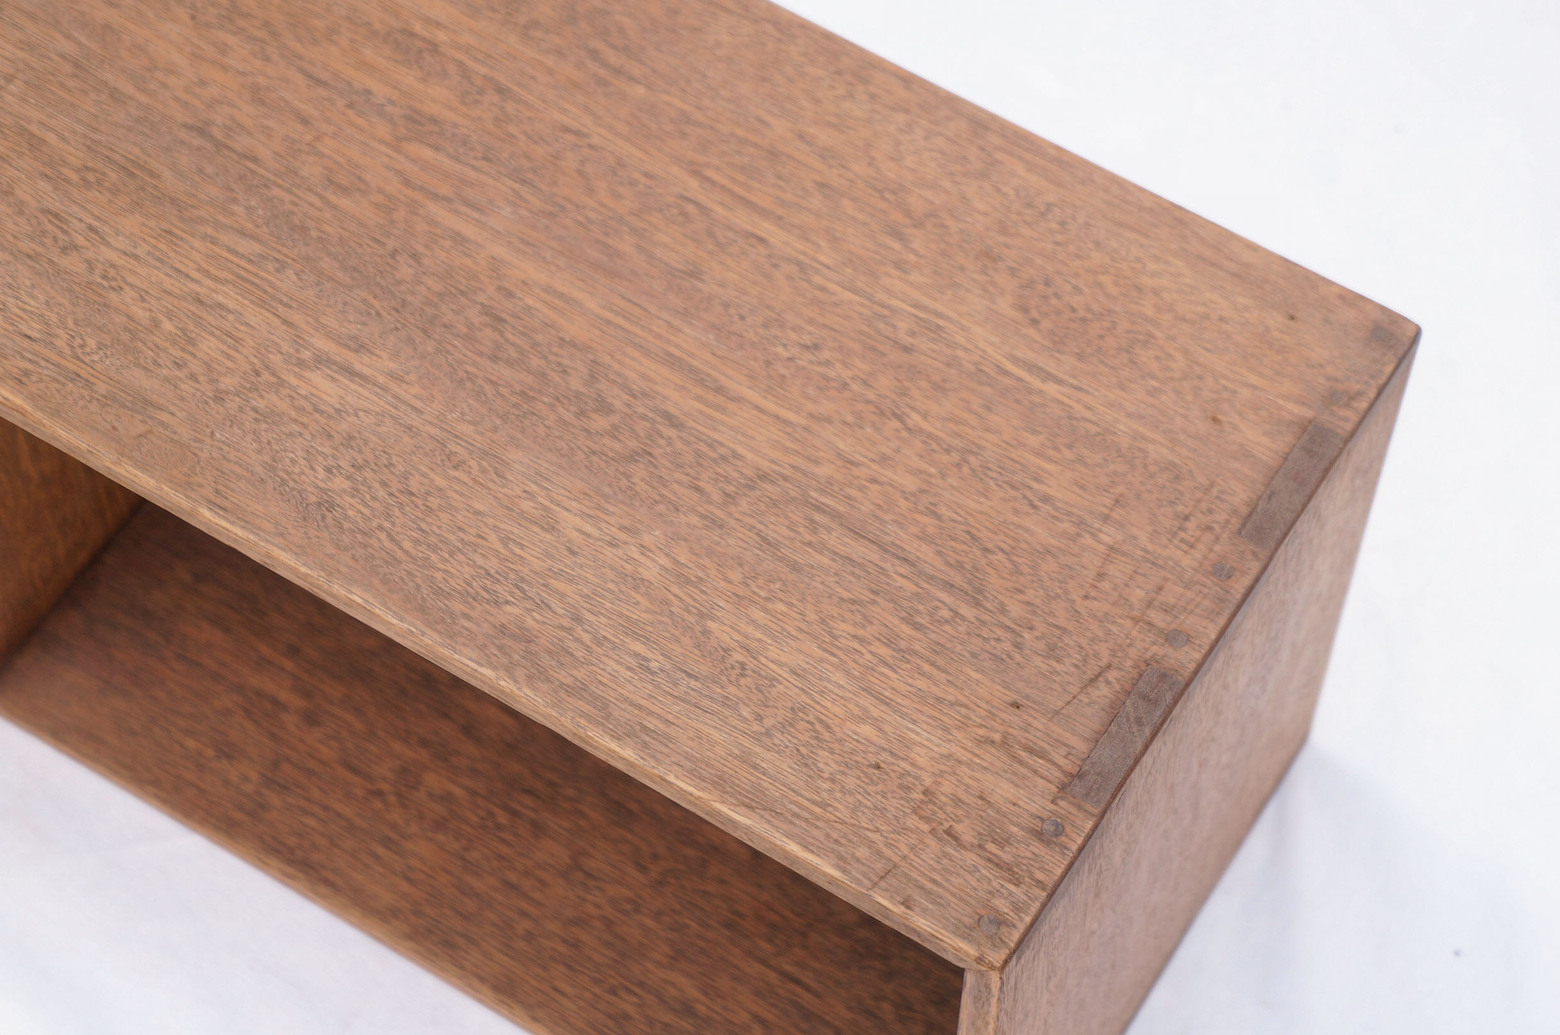 Japanese Vintage Wooden Box Shelf/ジャパンヴィンテージ ボックスシェルフ 木箱 収納ボックス レトロ シャビー 大 8